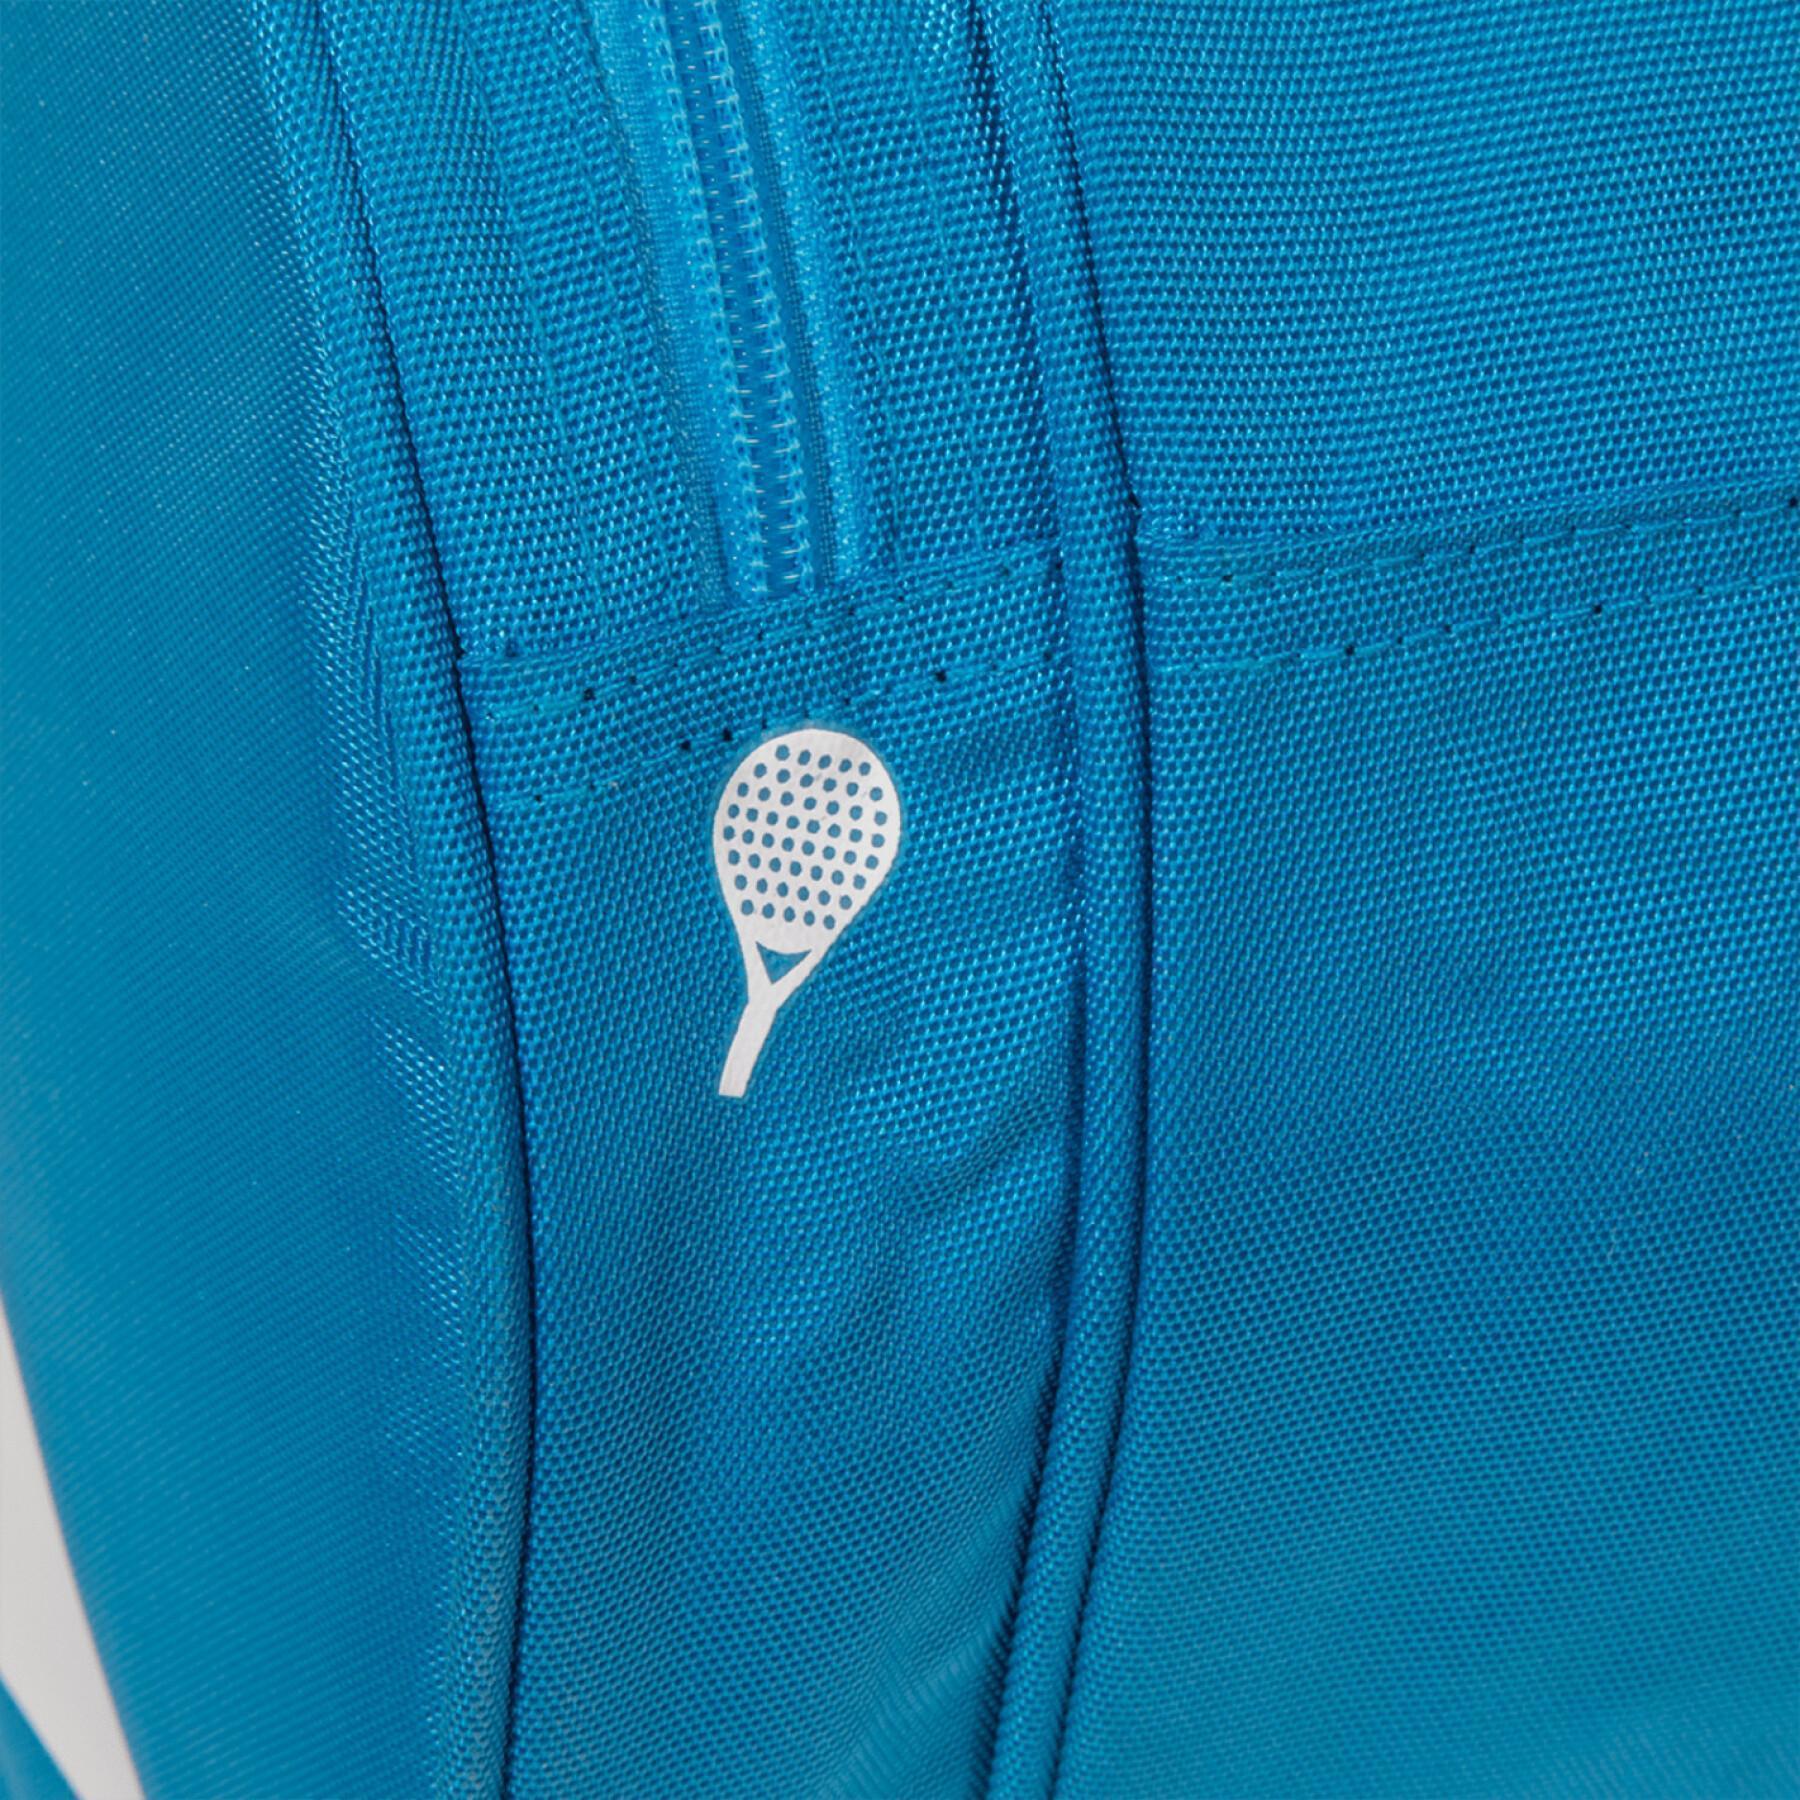 Racket bag from padel adidas Control 3.2